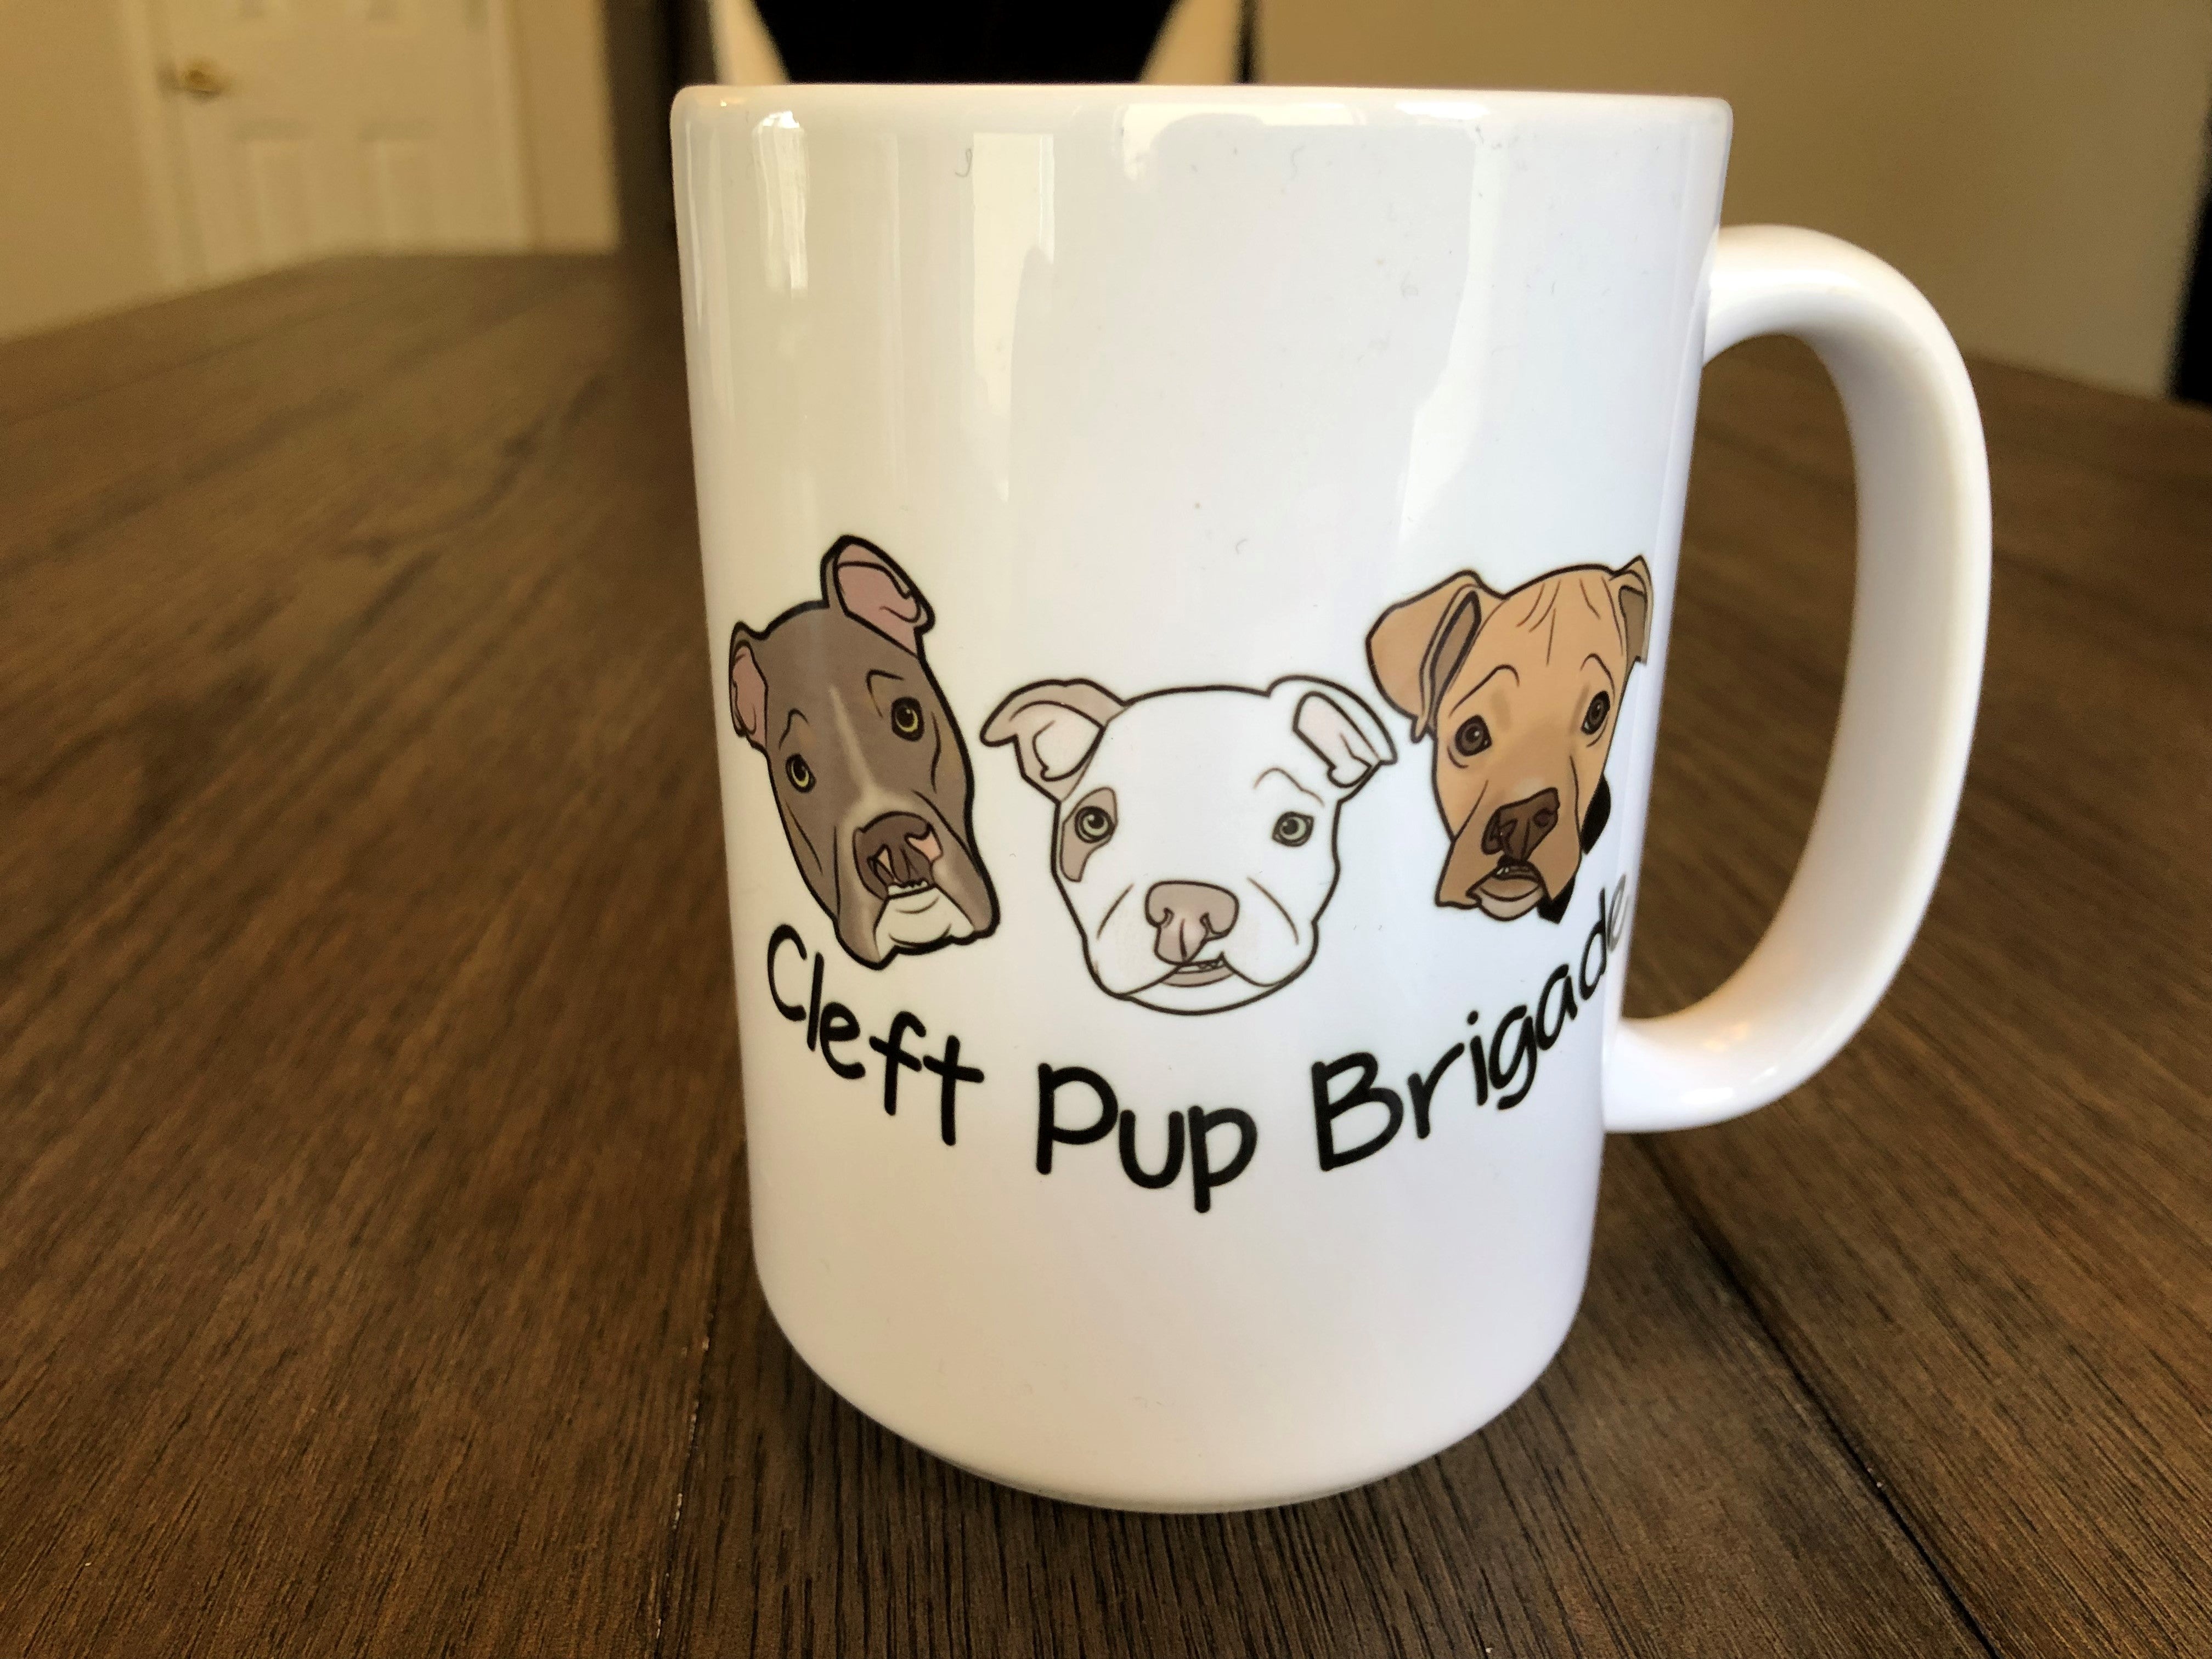 Cleft Pup Brigade Coffee Mug - Ruff Life Rescue Wear